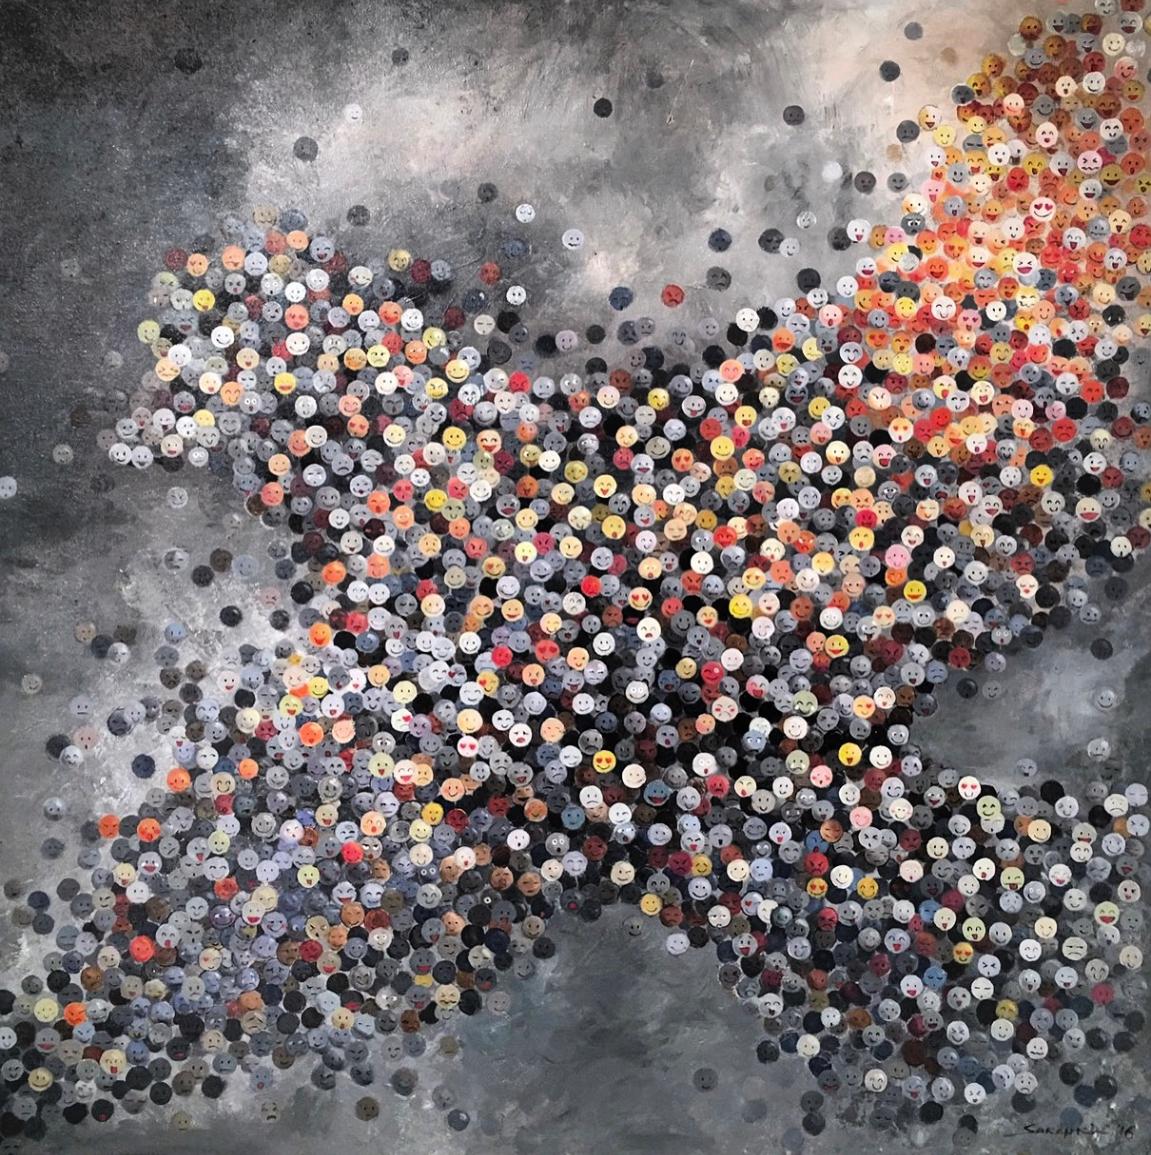 Peace(Dove) - Painting by Sarah Kim